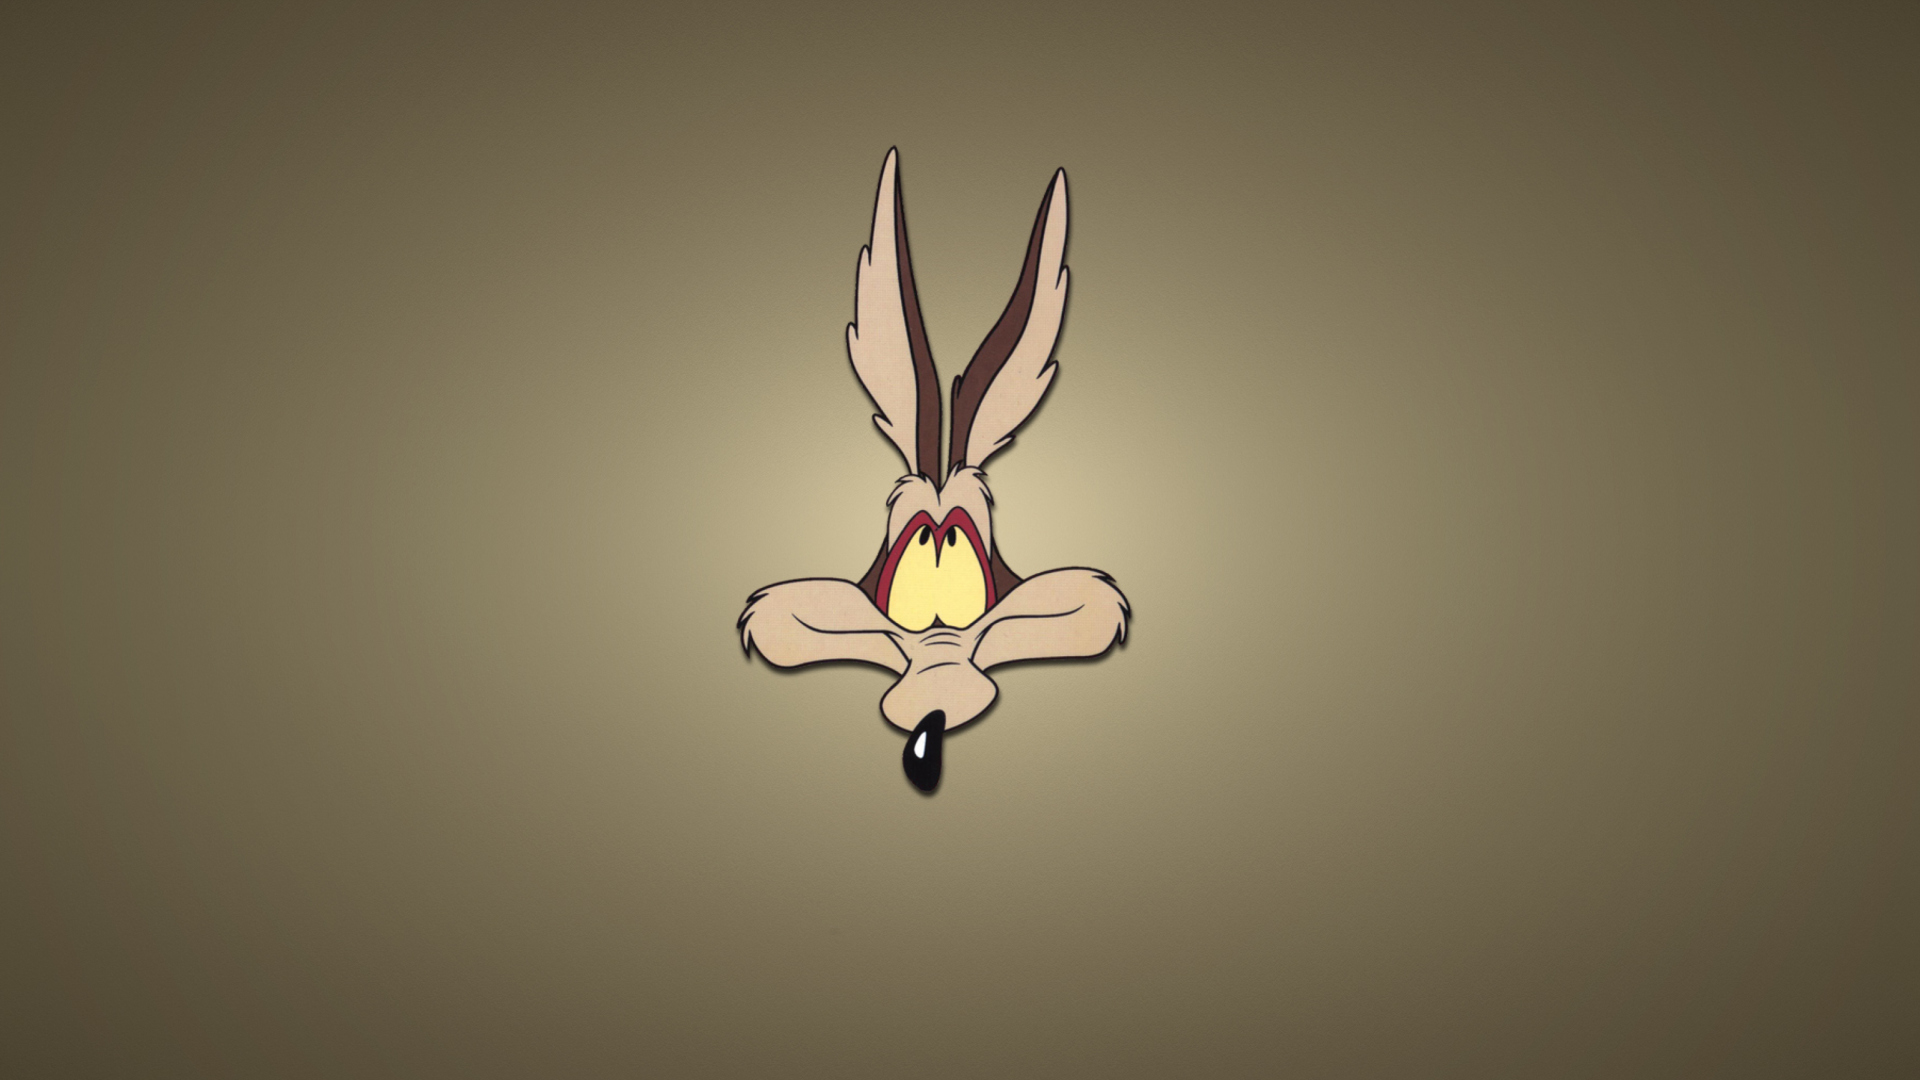 Looney Tunes Wile E. Coyote wallpaper 1920x1080